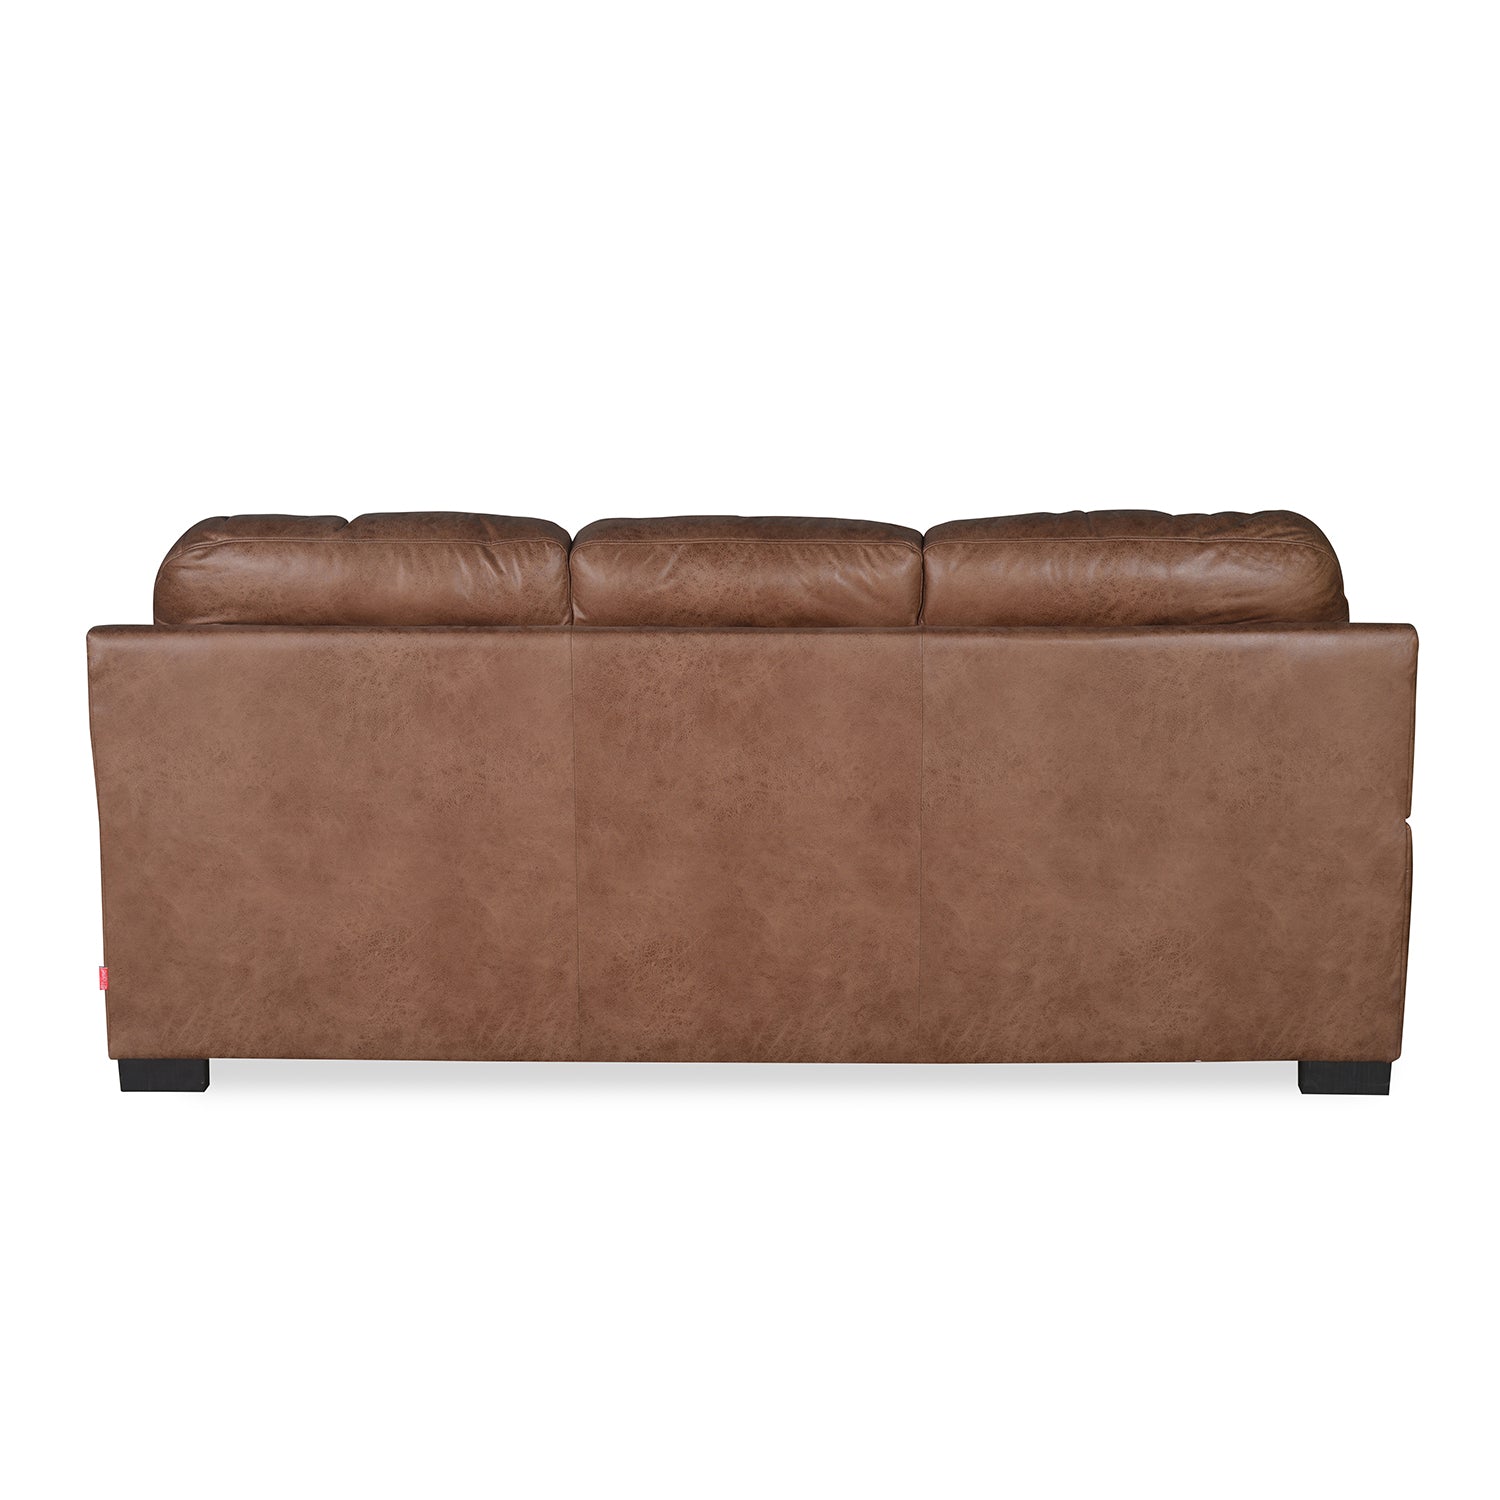 Kathleen 3 Seater Sofa (Brown)